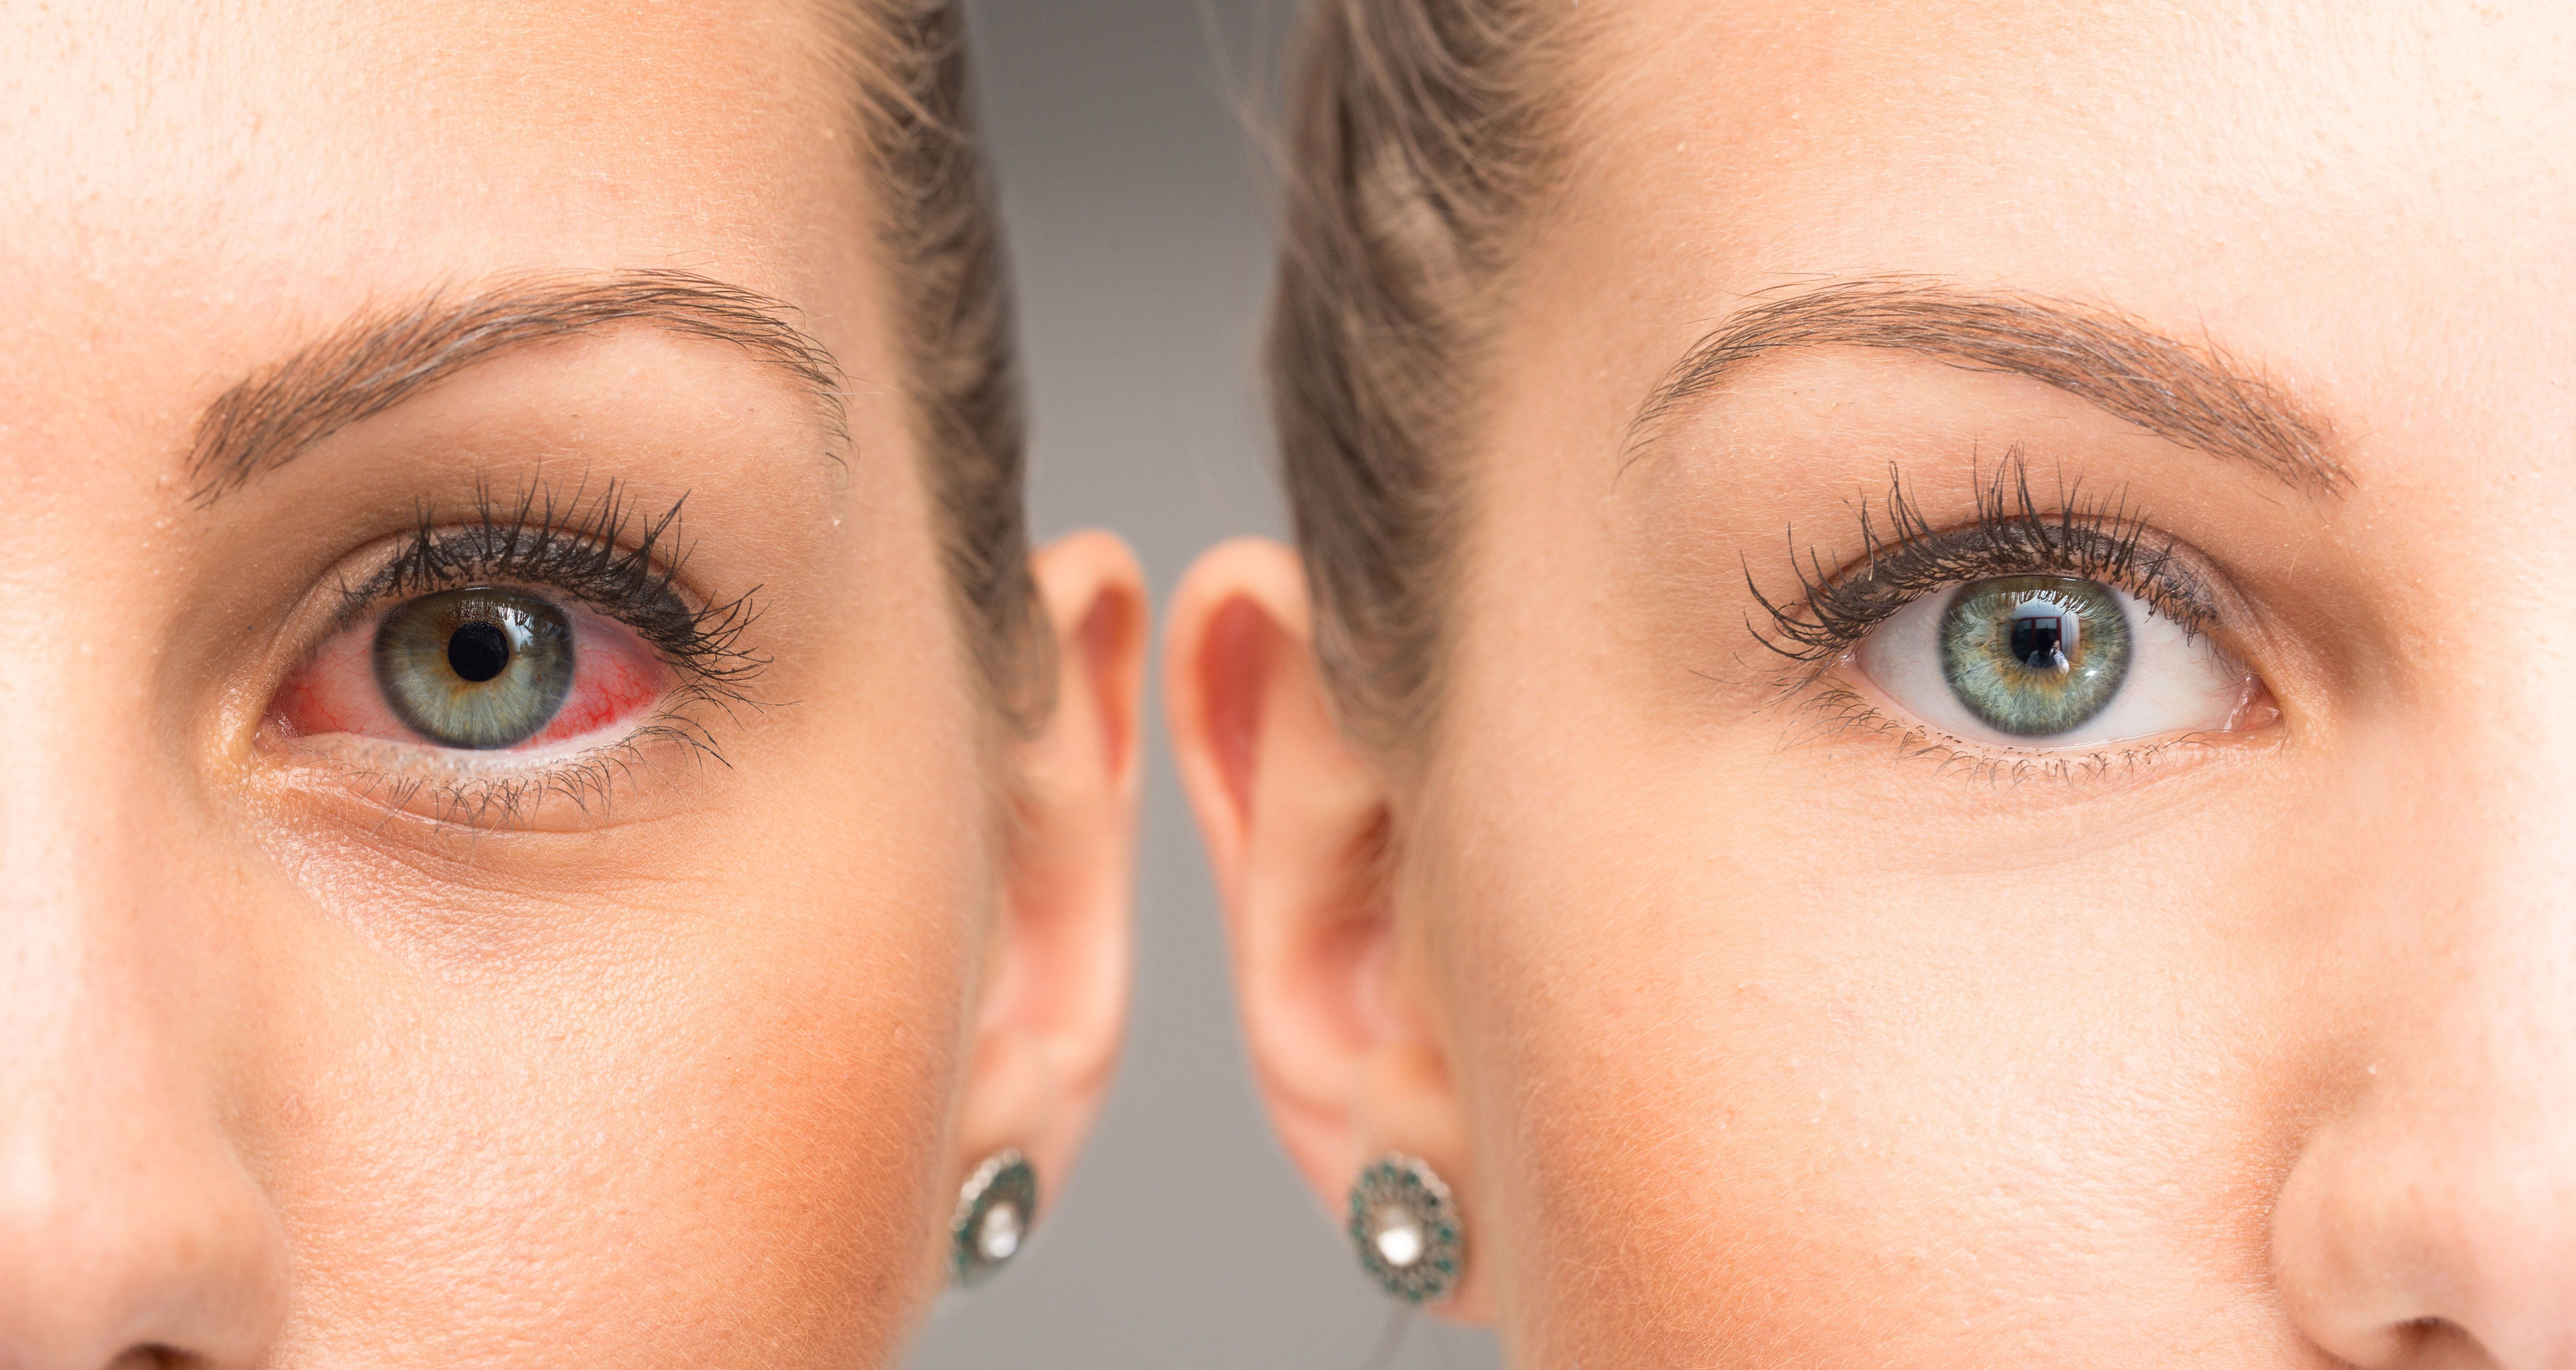 How Does LipiFlow® Treat Dry Eye?